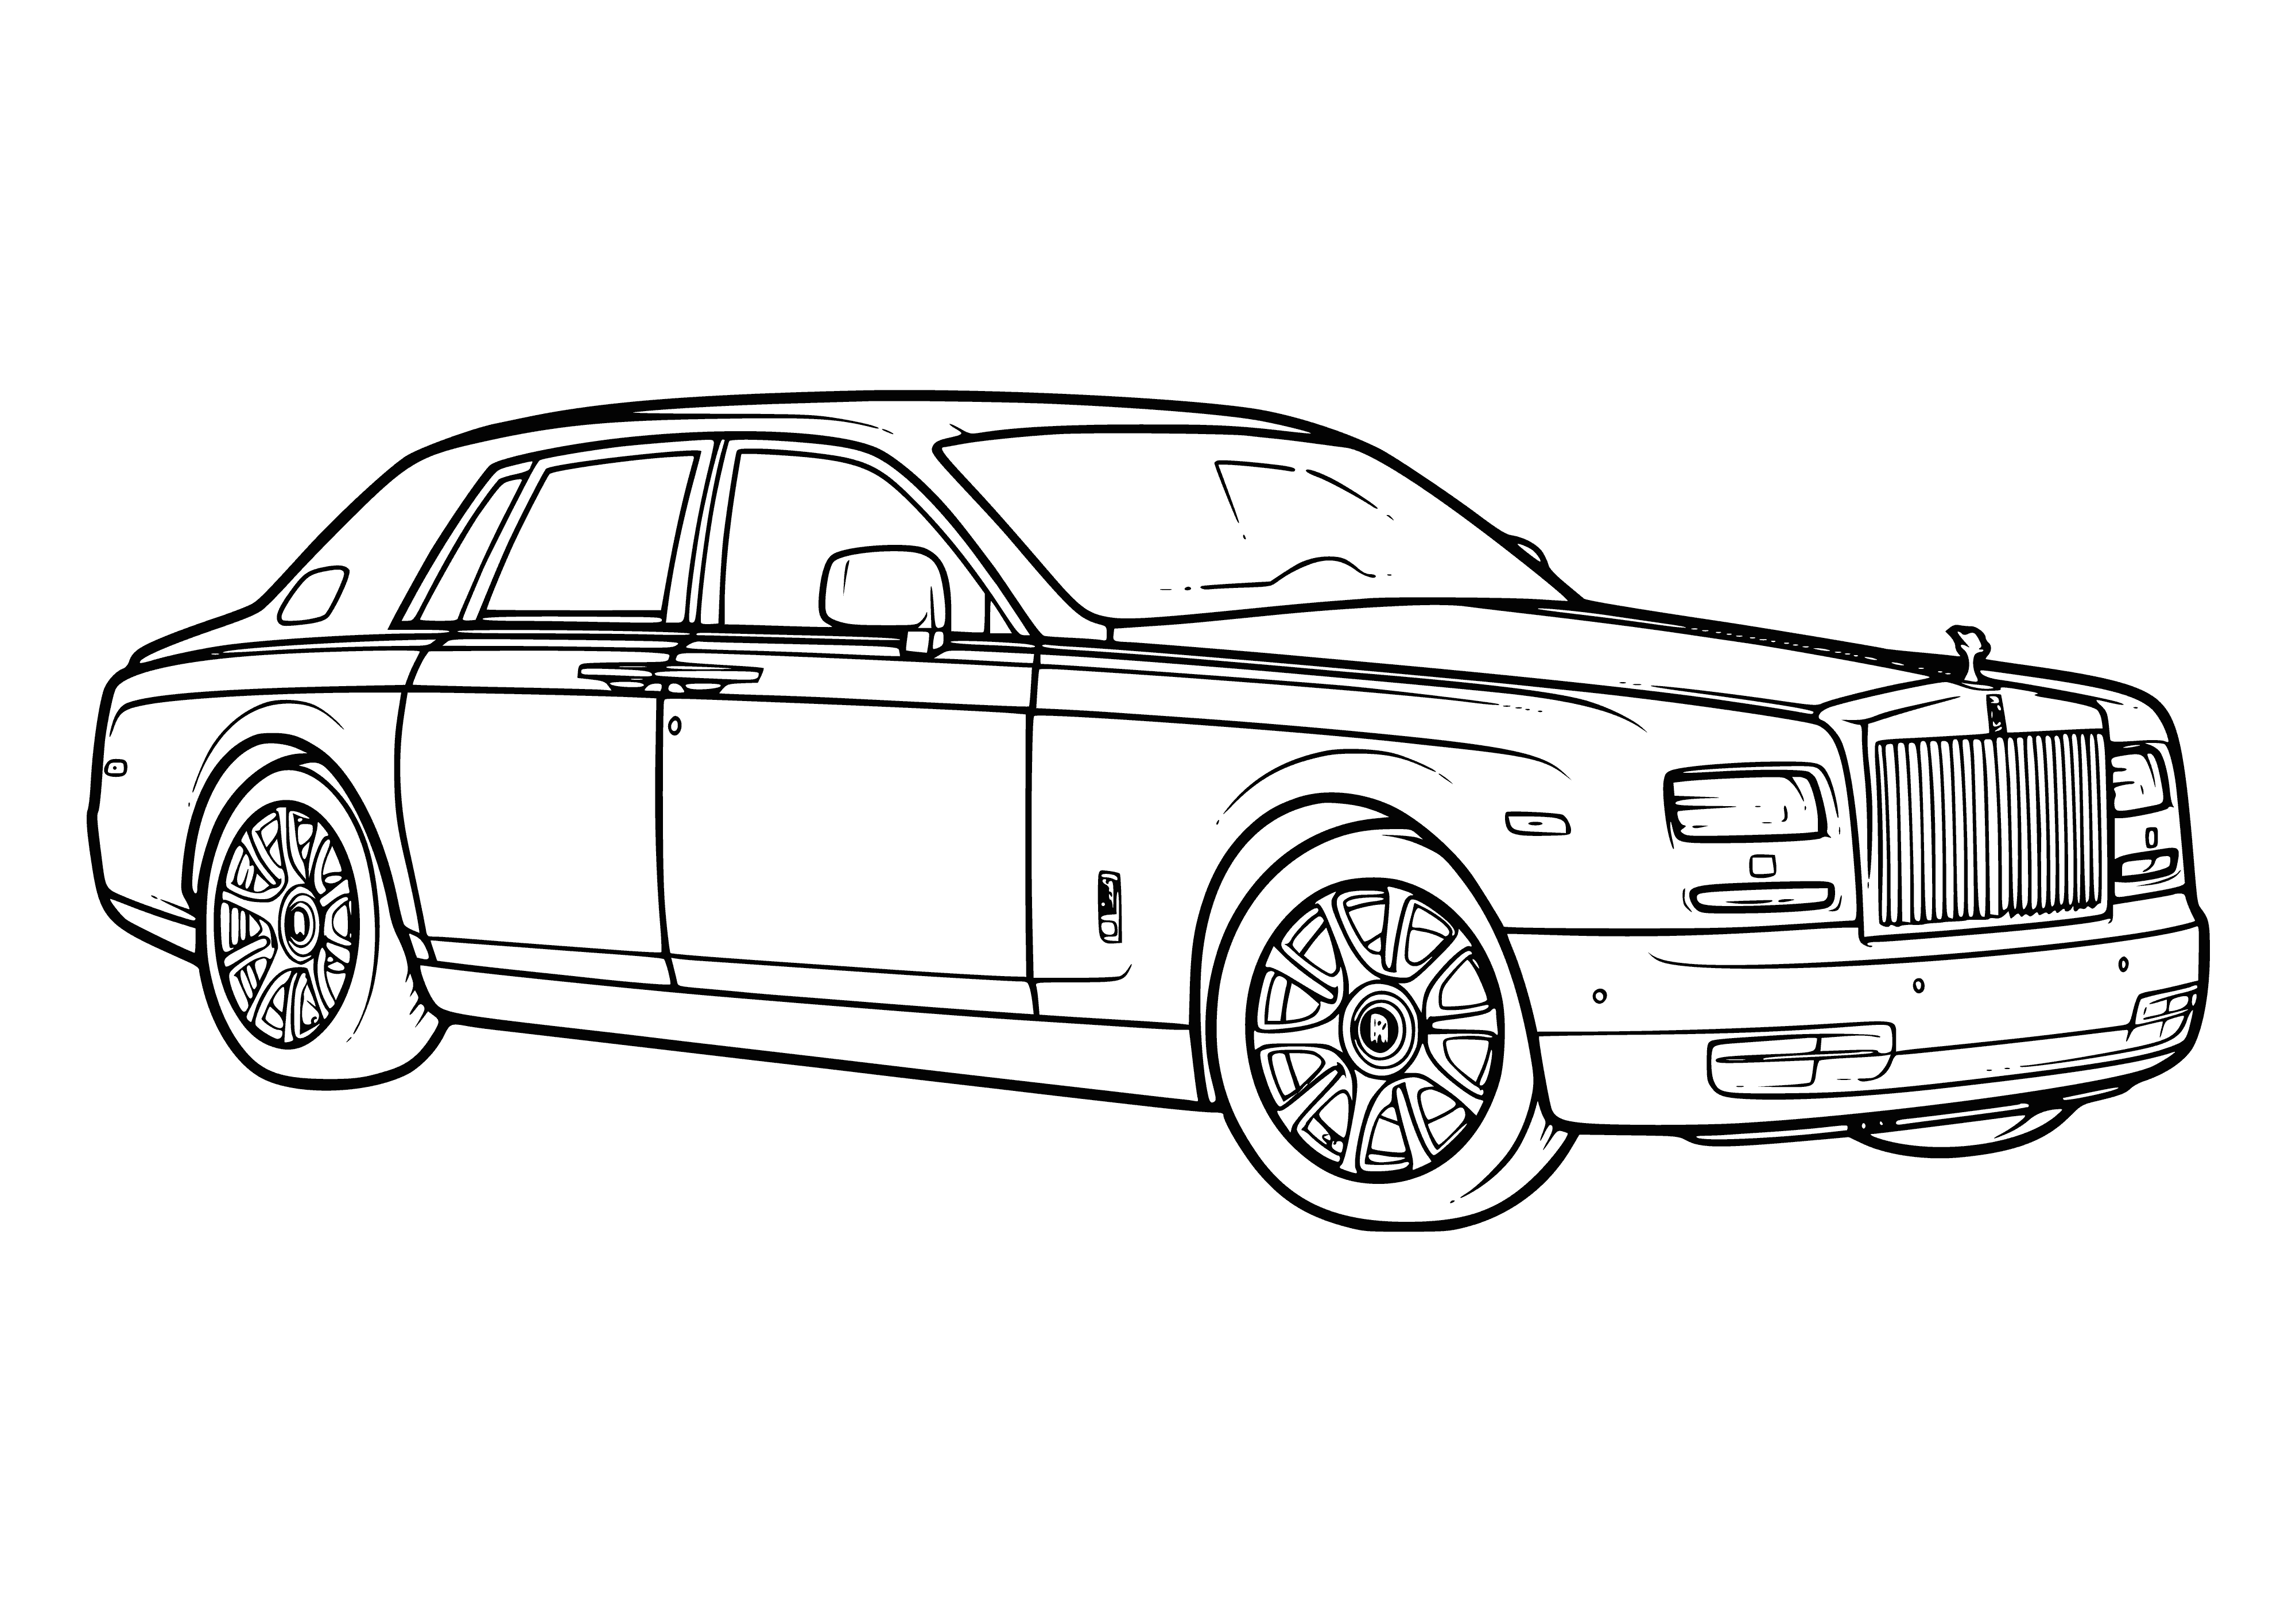 Rolls-Royce Phantom coloring page